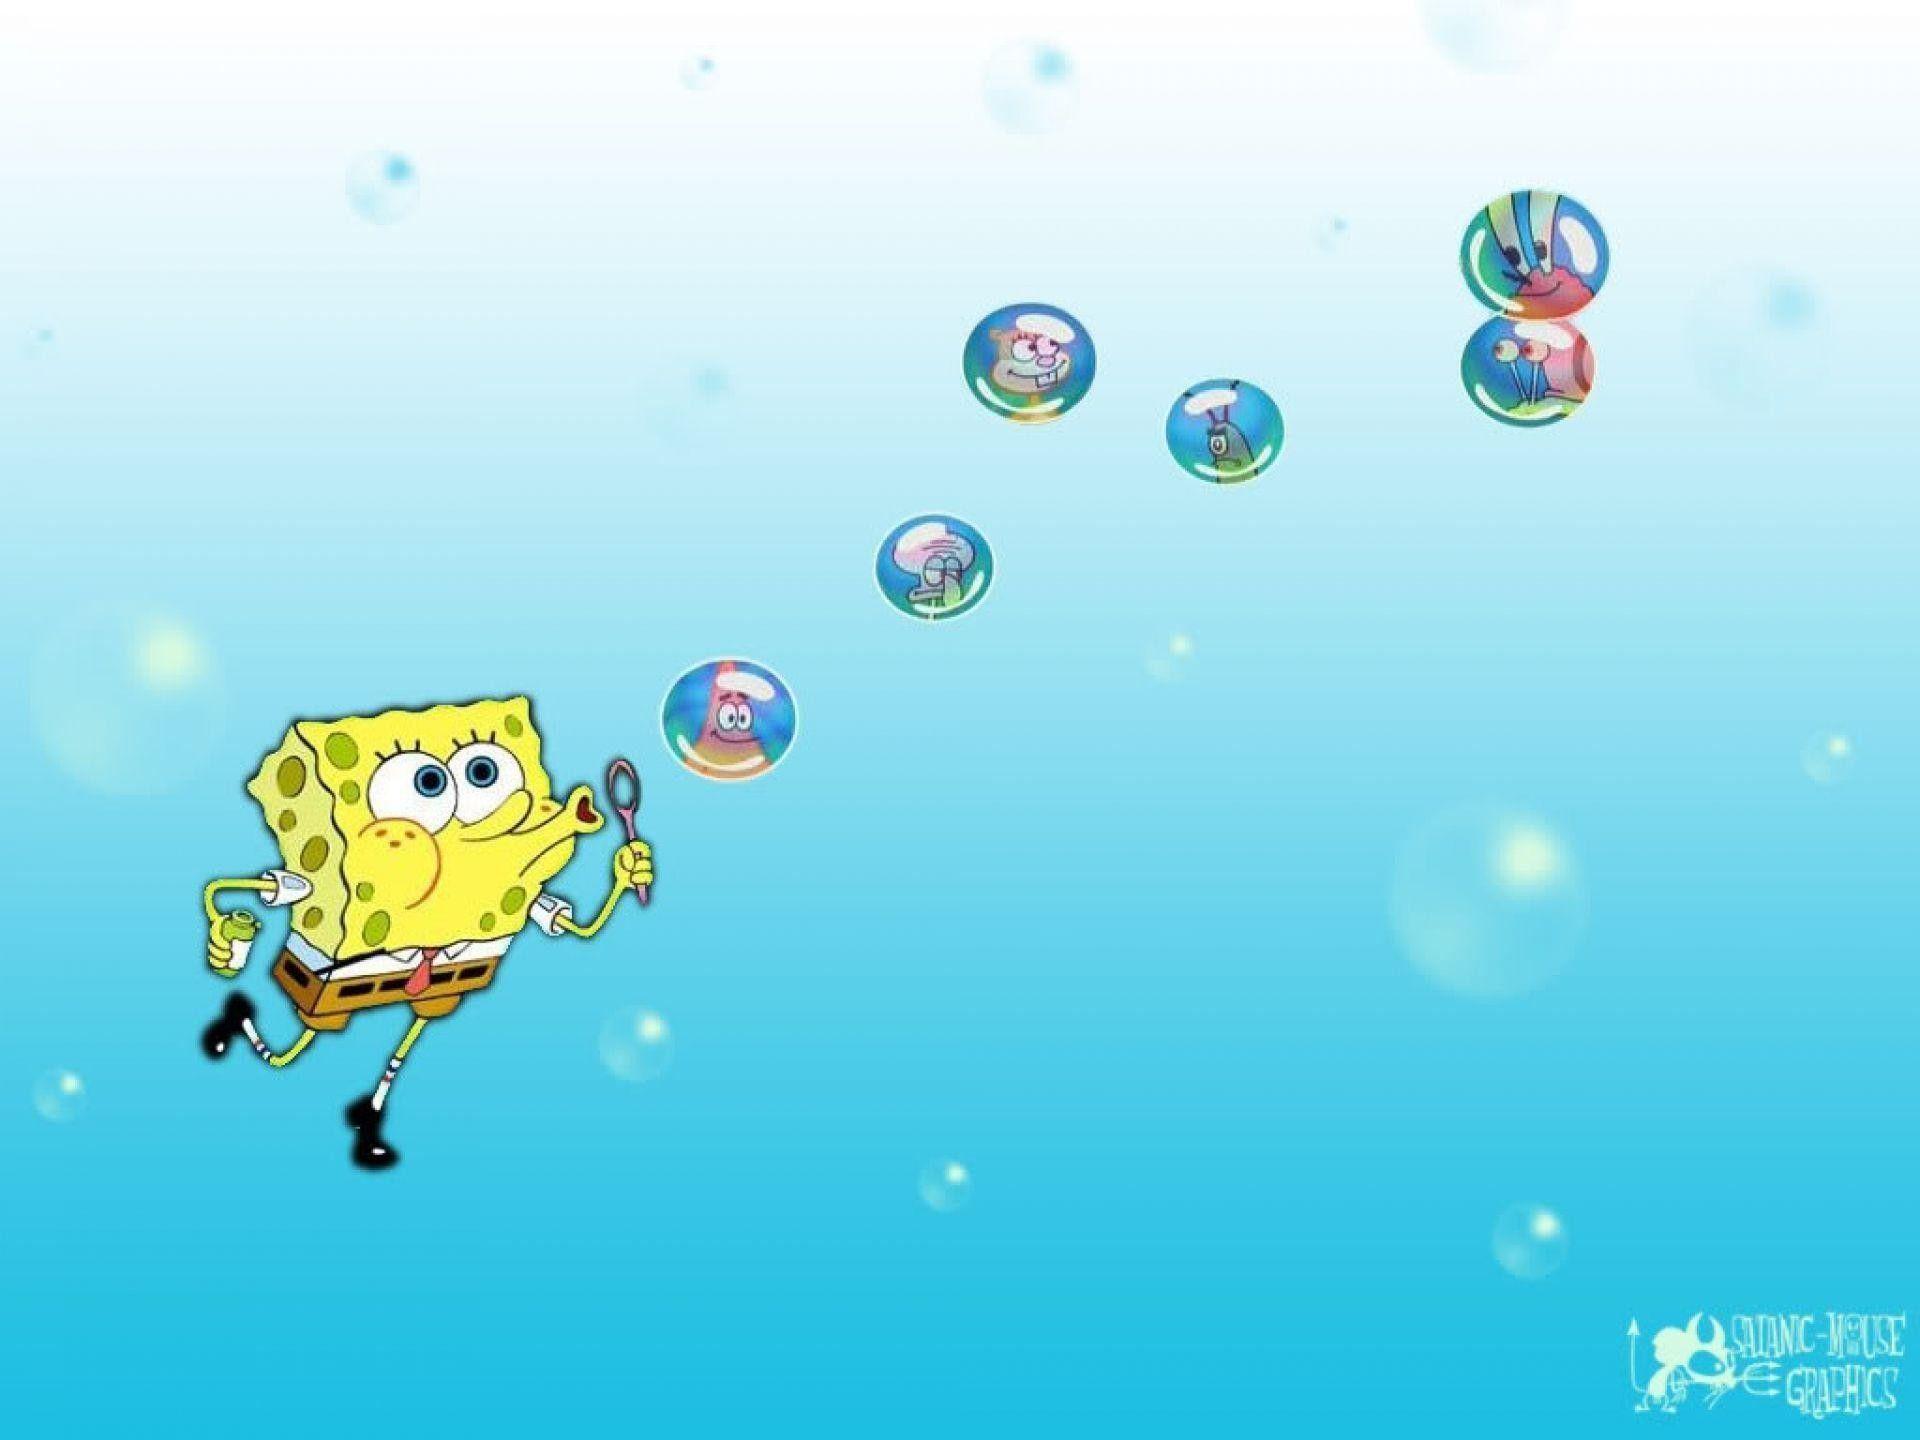 spongebob flower background 5. Background Check All